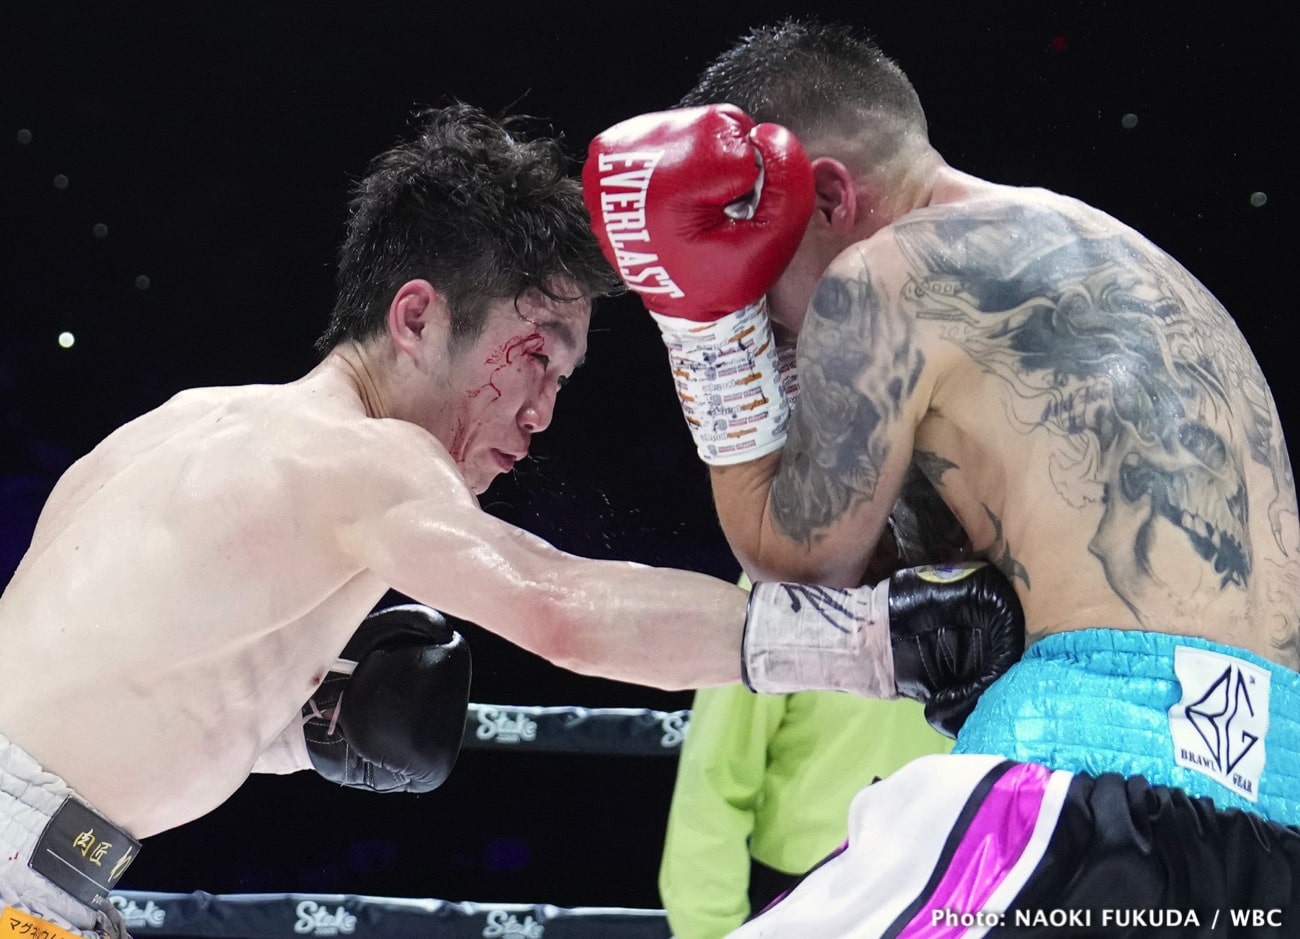 Kenshiro Teraji Stops Hekkie Budler In Ninth Round - Boxing Results